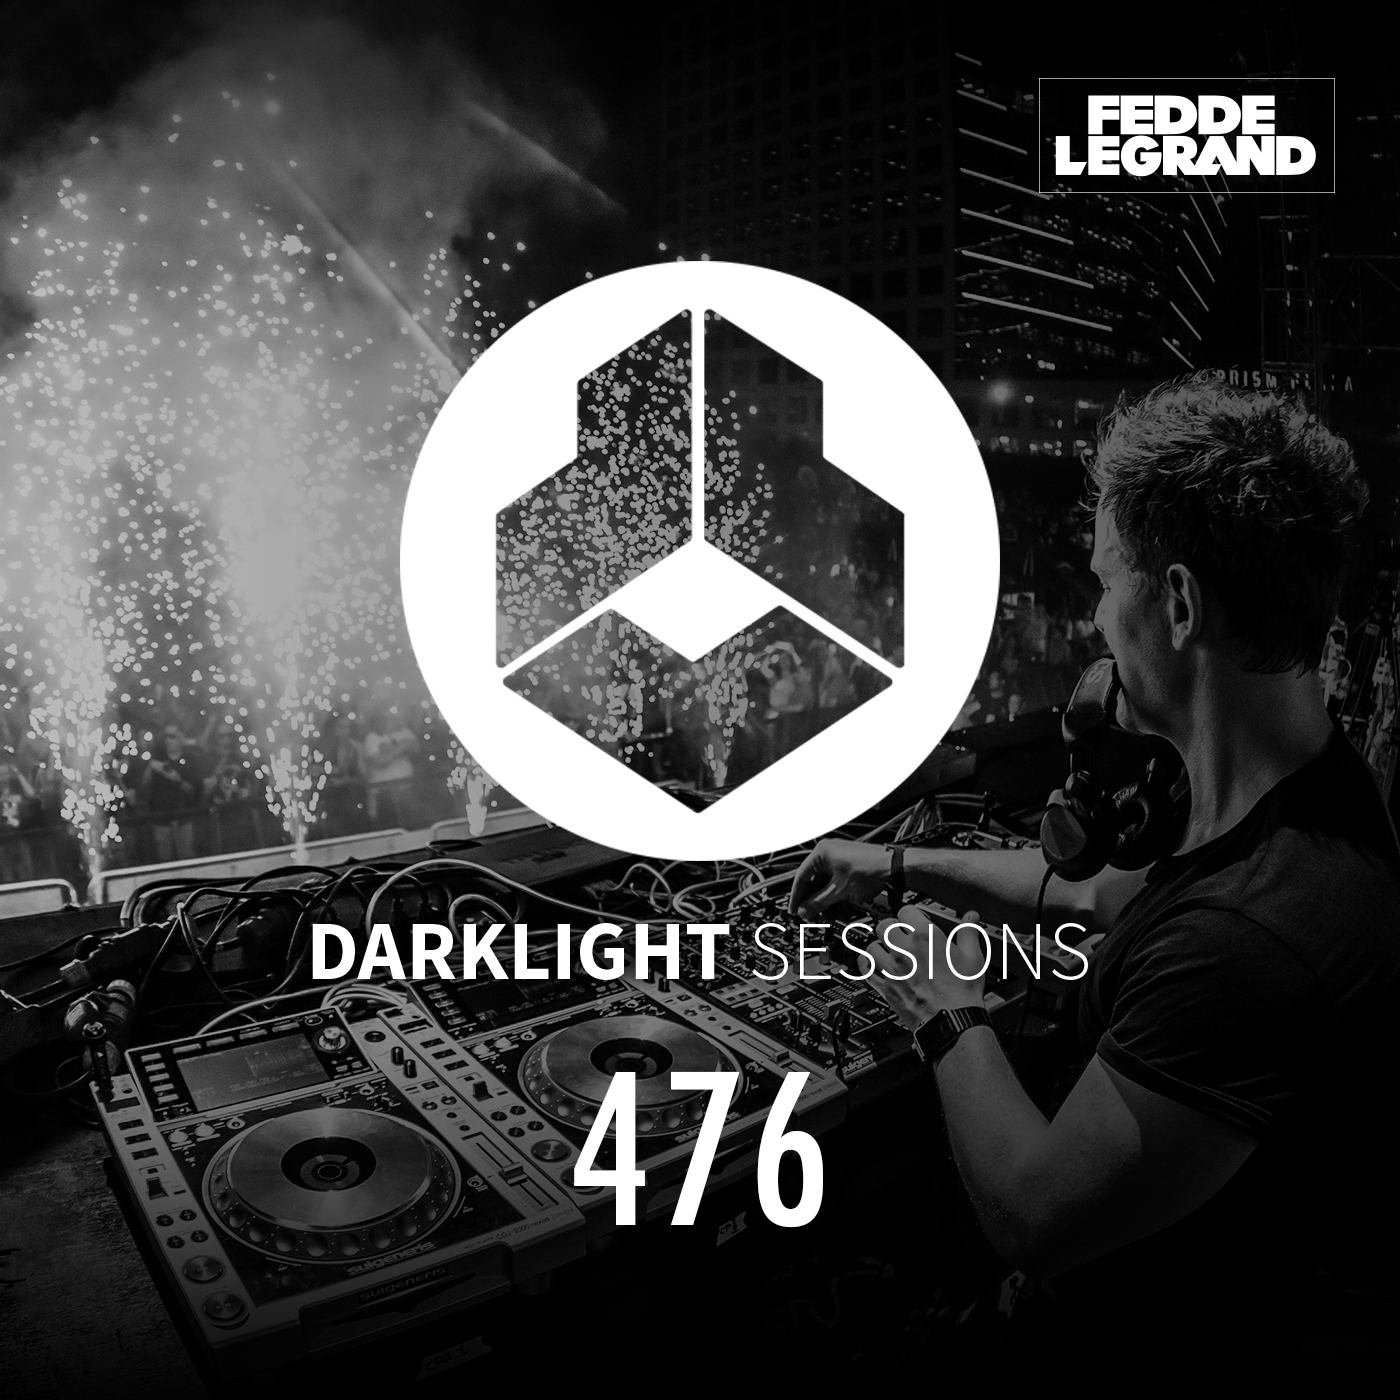 Darklight Sessions 476